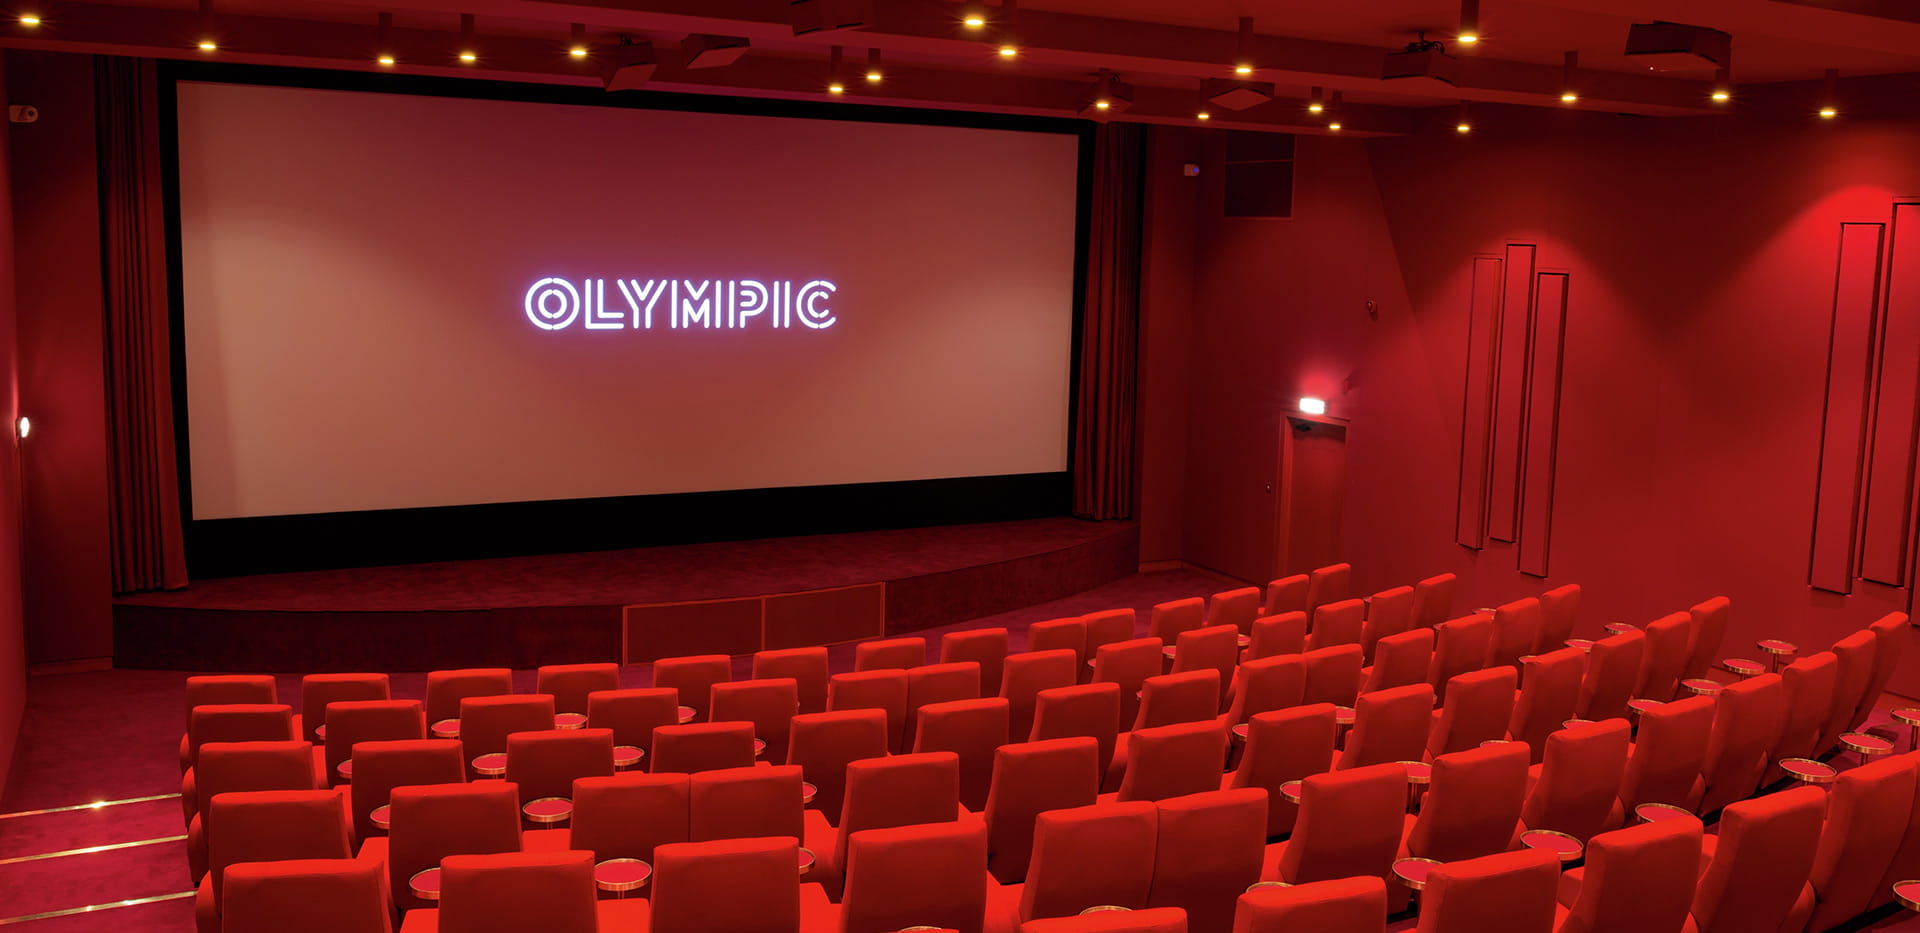 Fulham Reach, The Avenue, Olympic Cinema